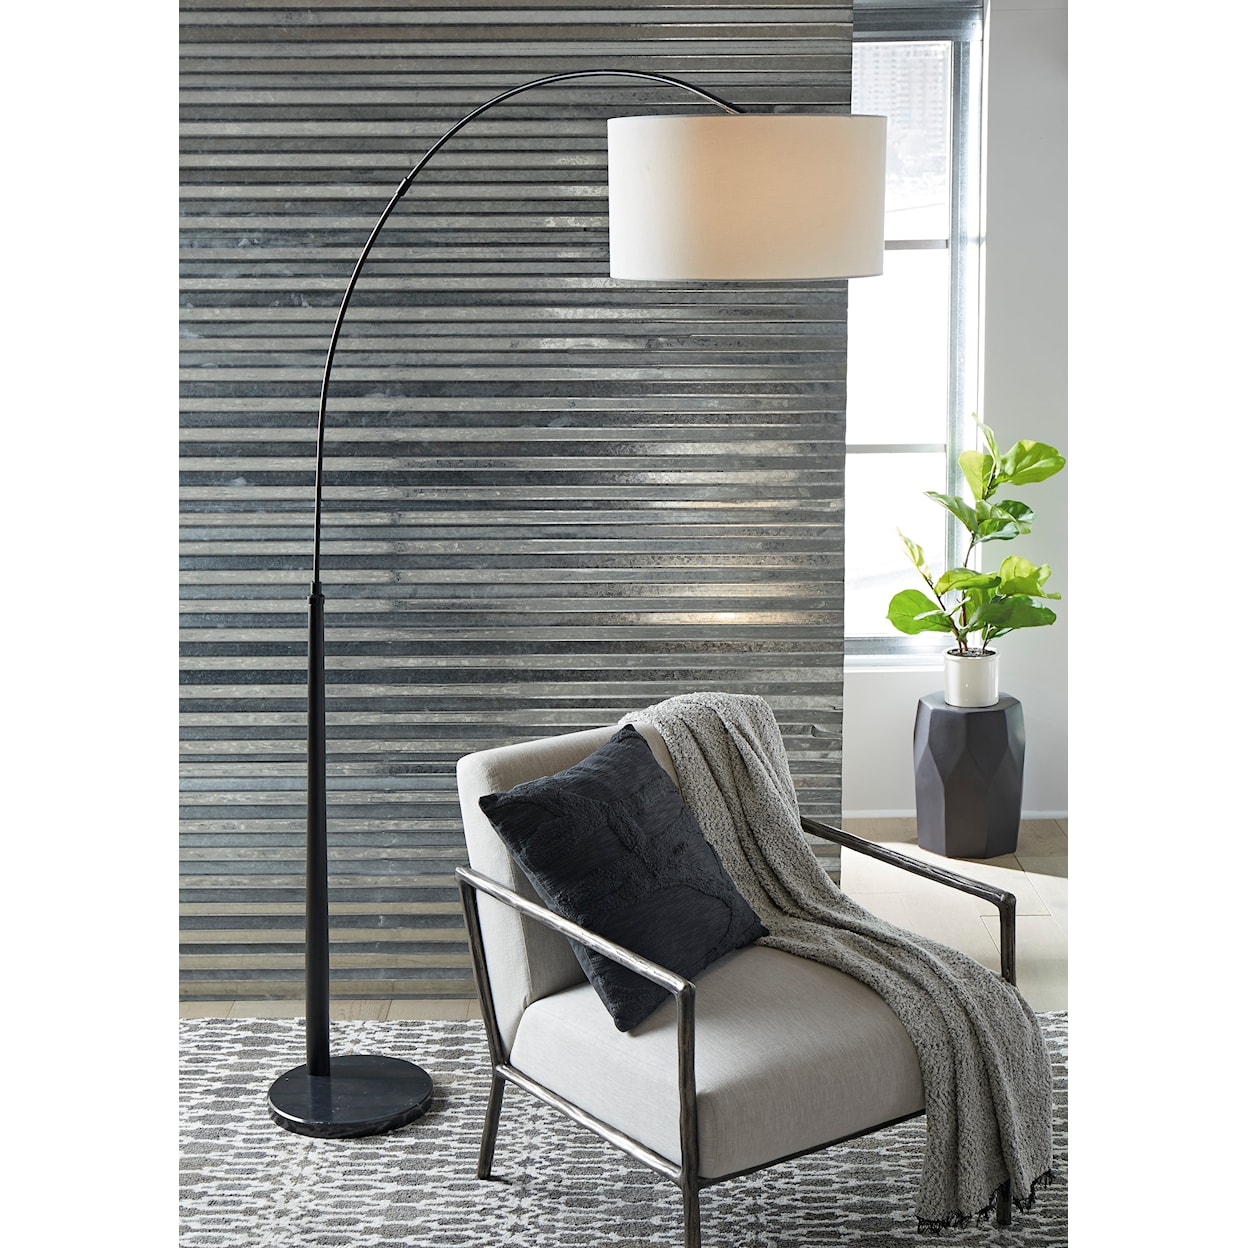 Ashley Furniture Signature Design Lamps - Contemporary Veergate Arc Lamp